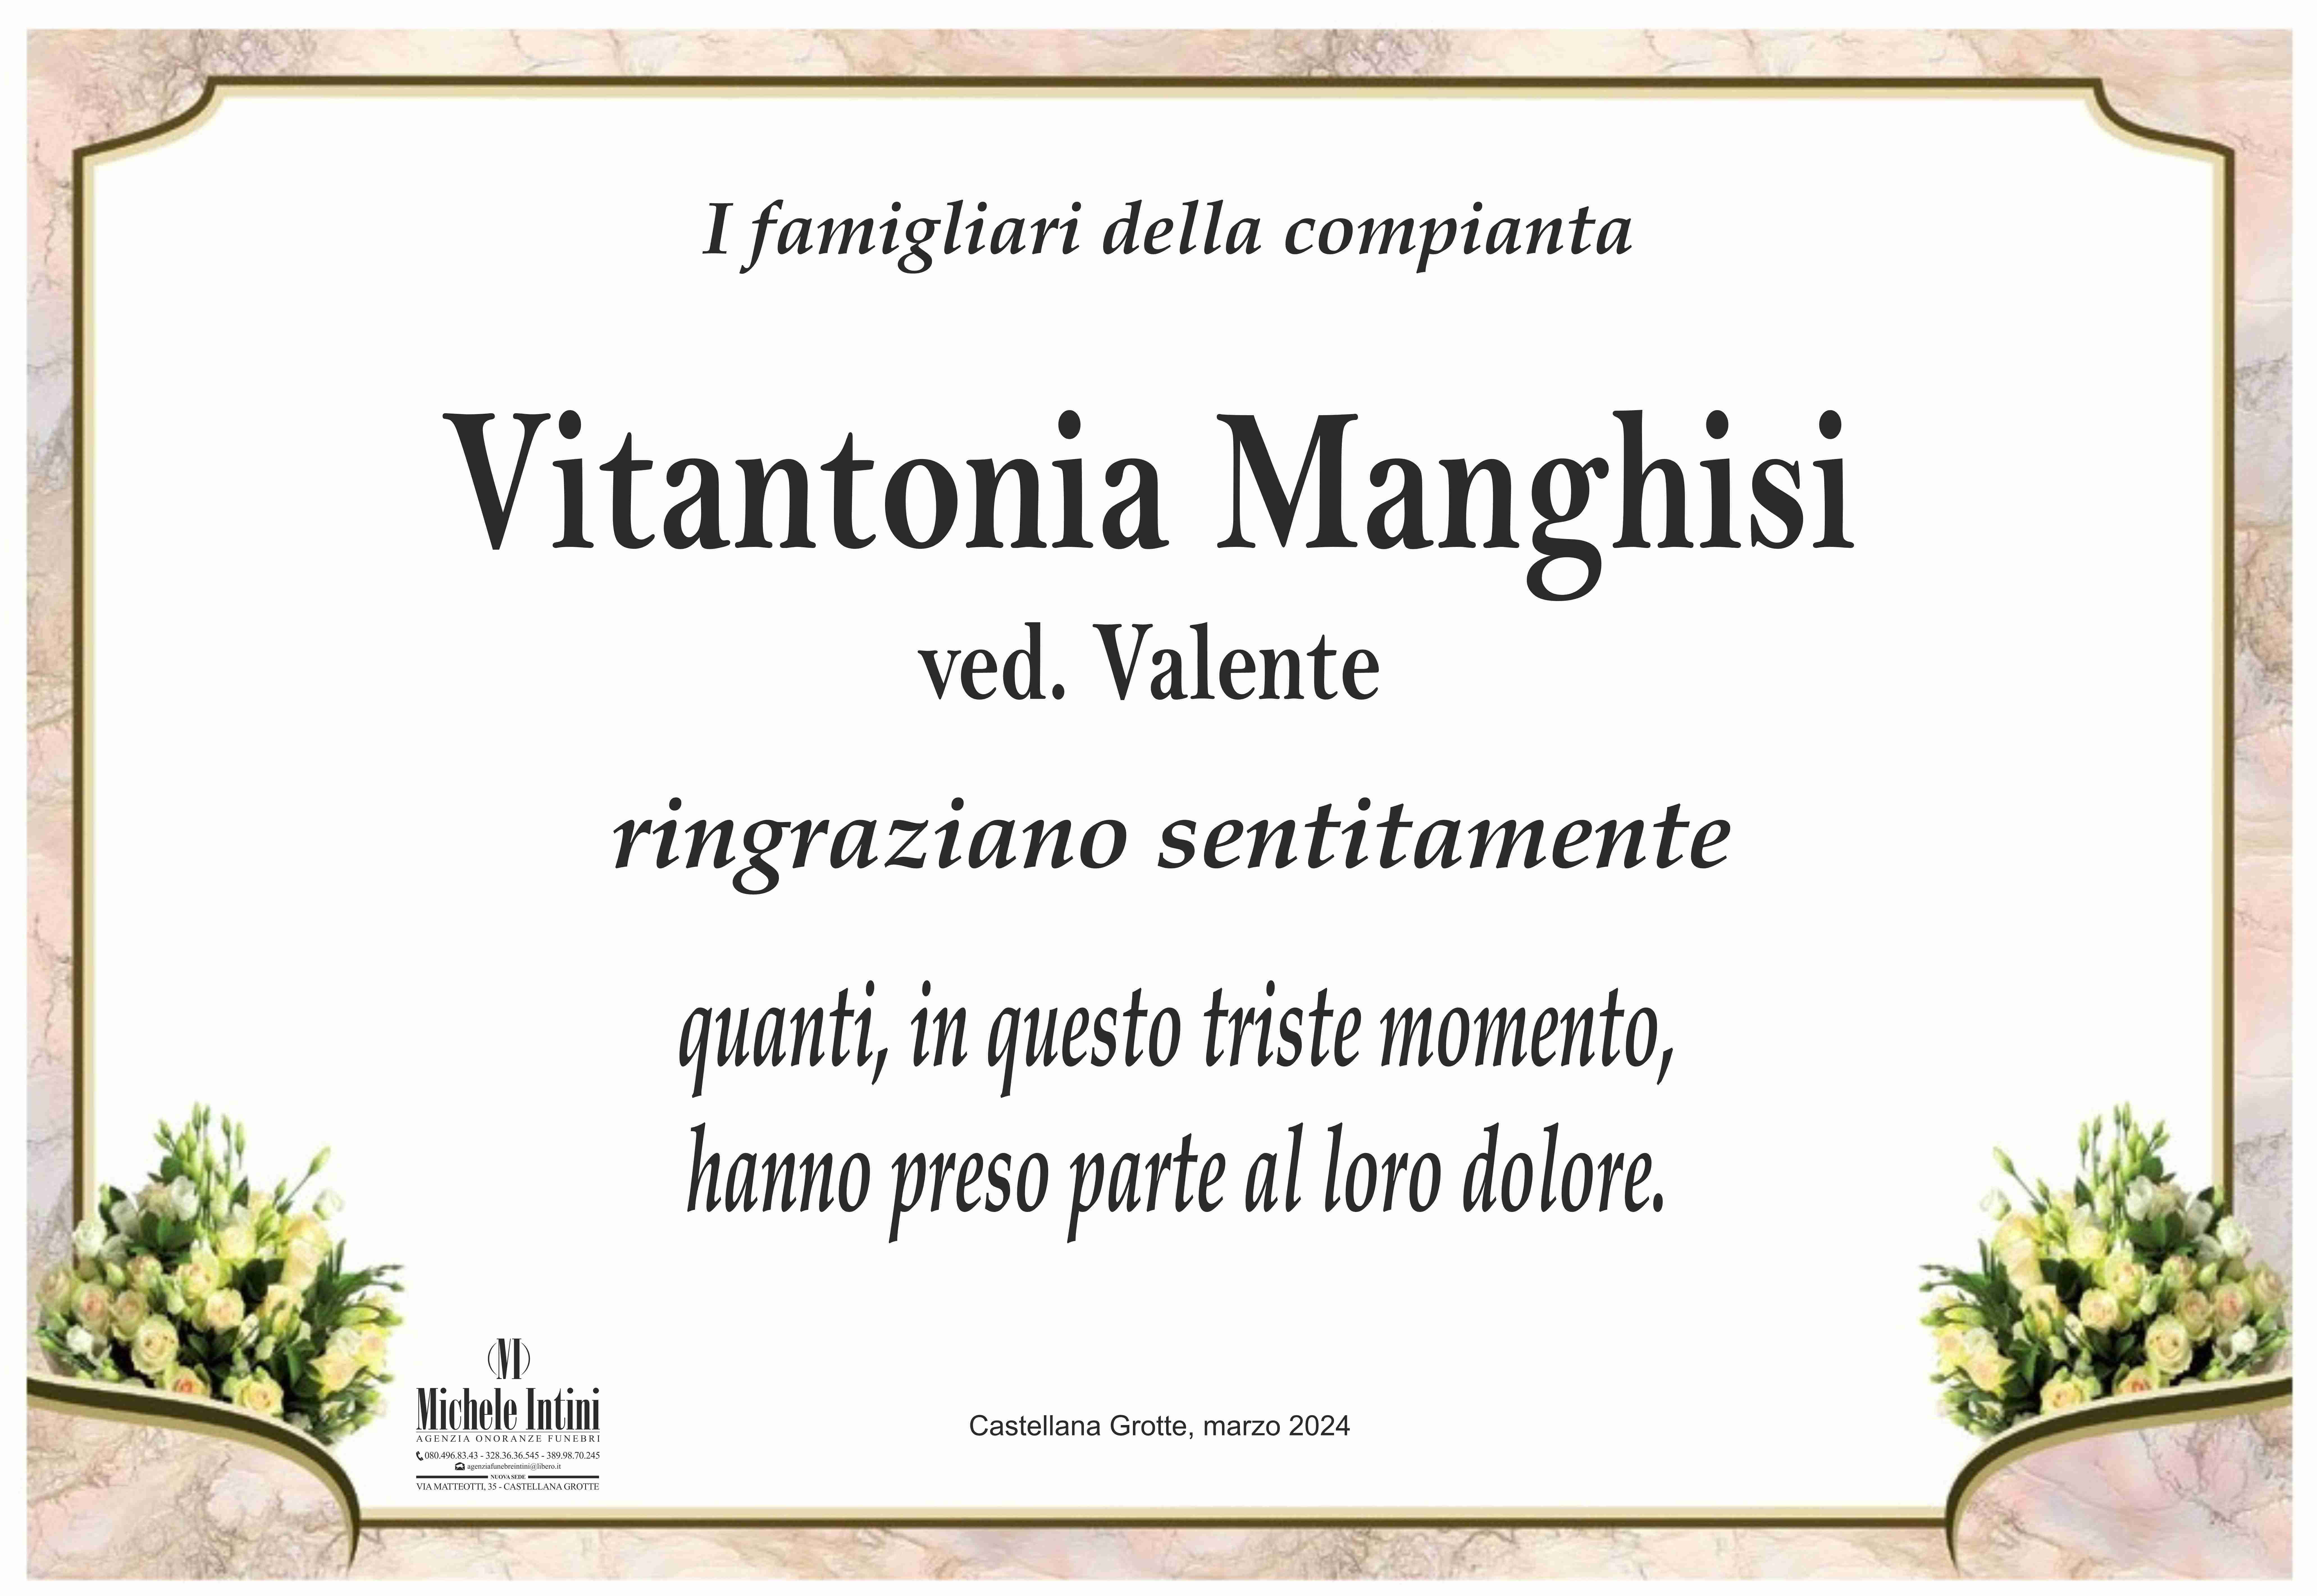 Vitantonia Manghisi